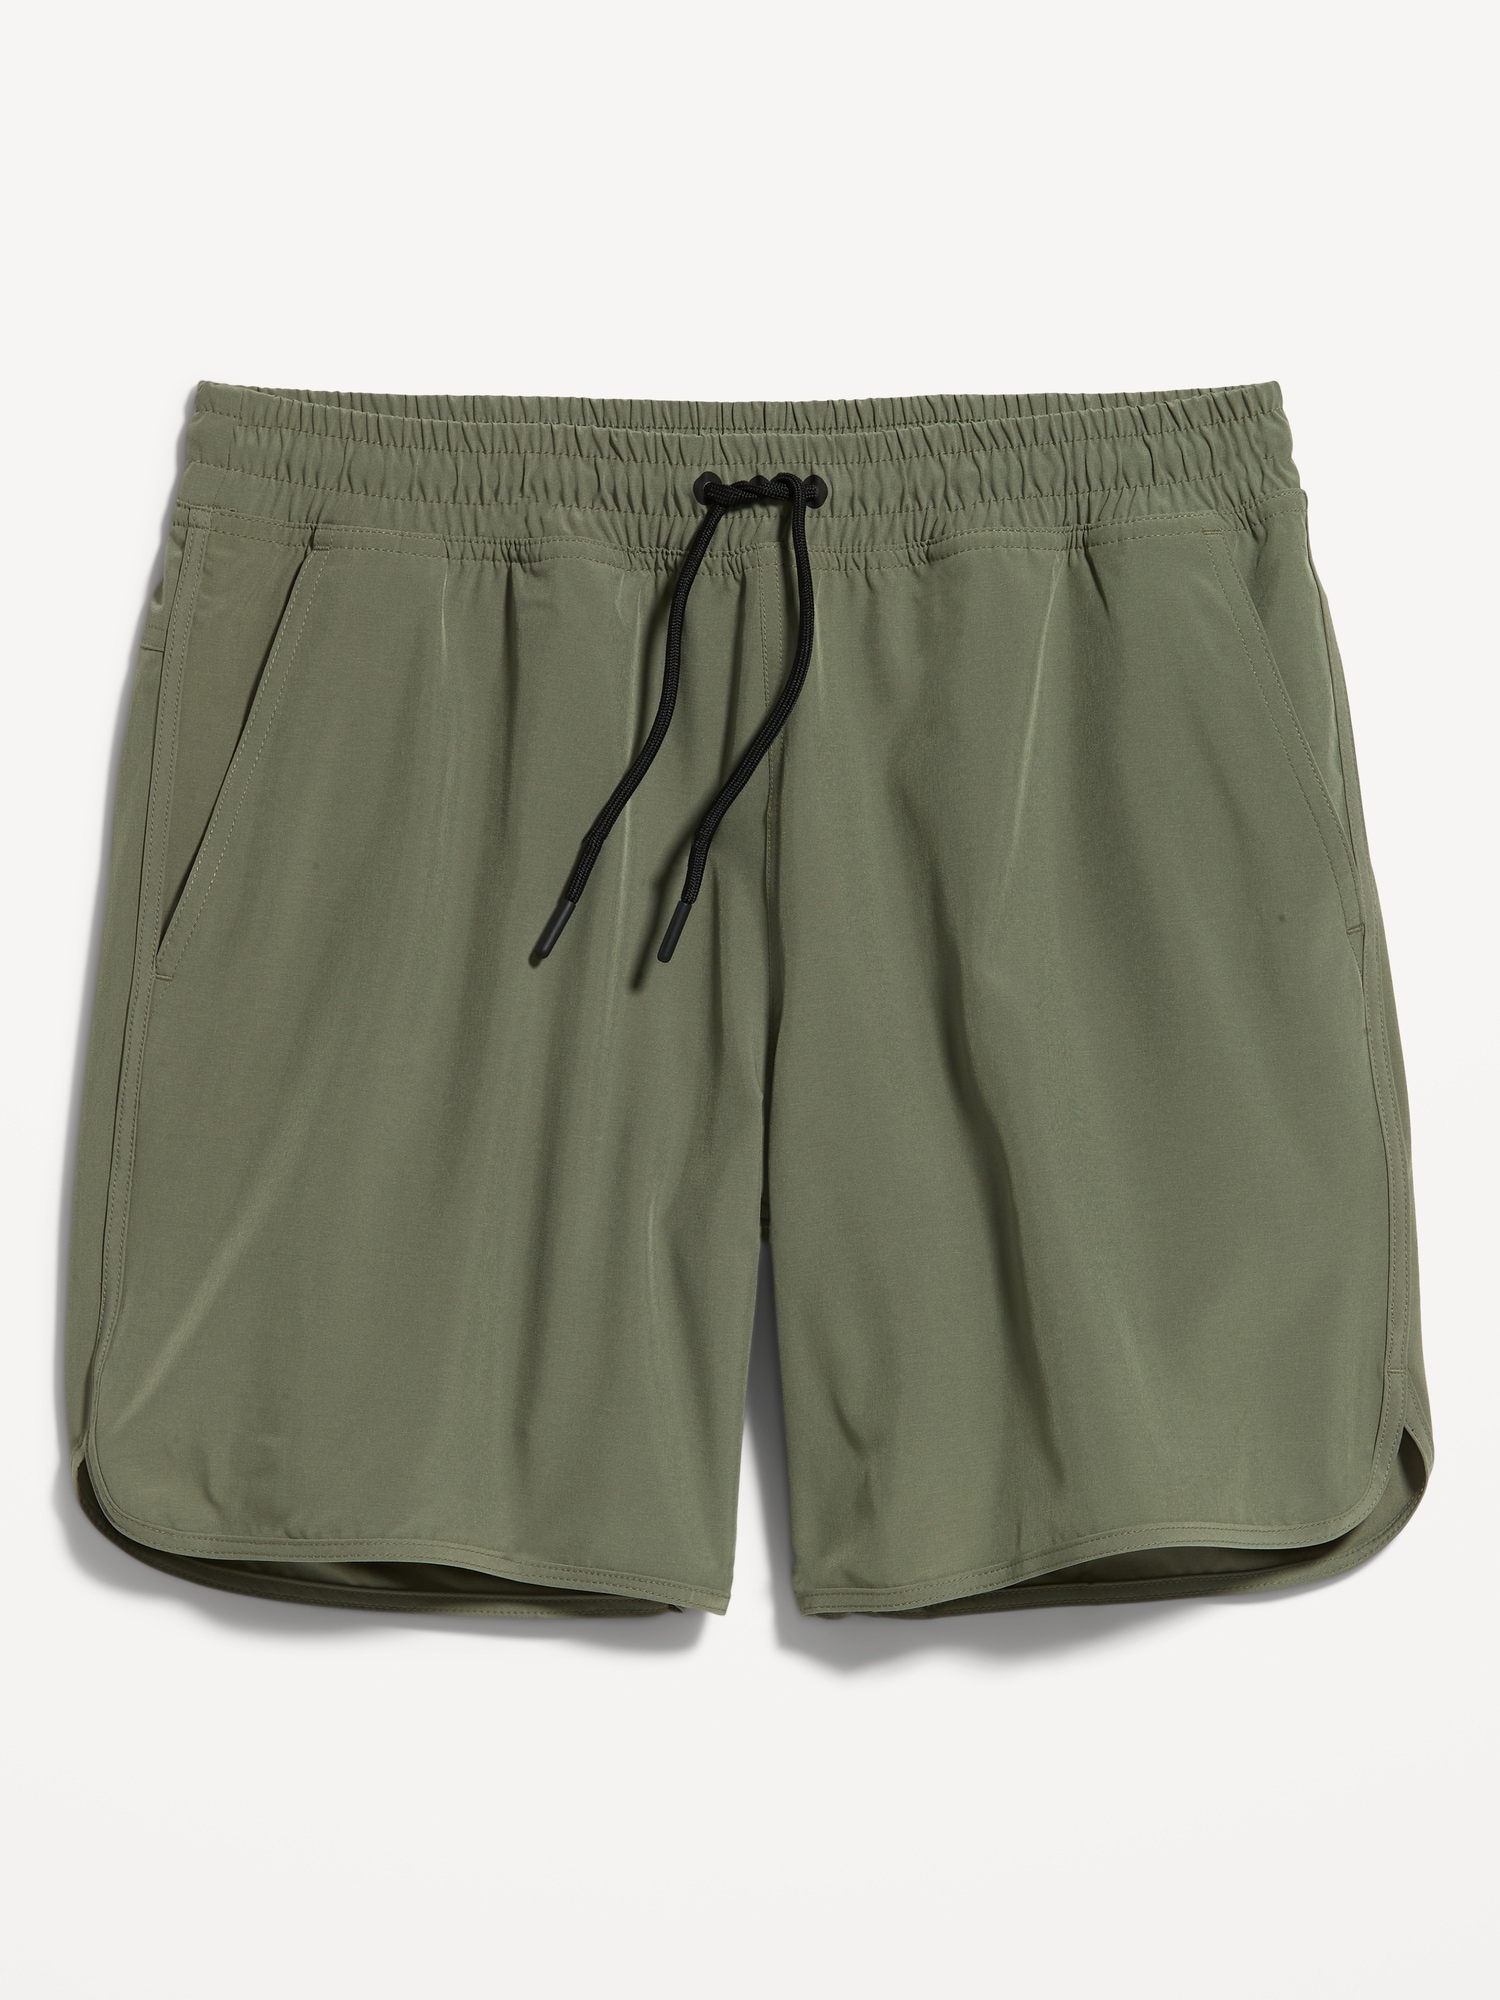 StretchTech Rec Swim-to-Street Shorts for Men -- 7-inch inseam